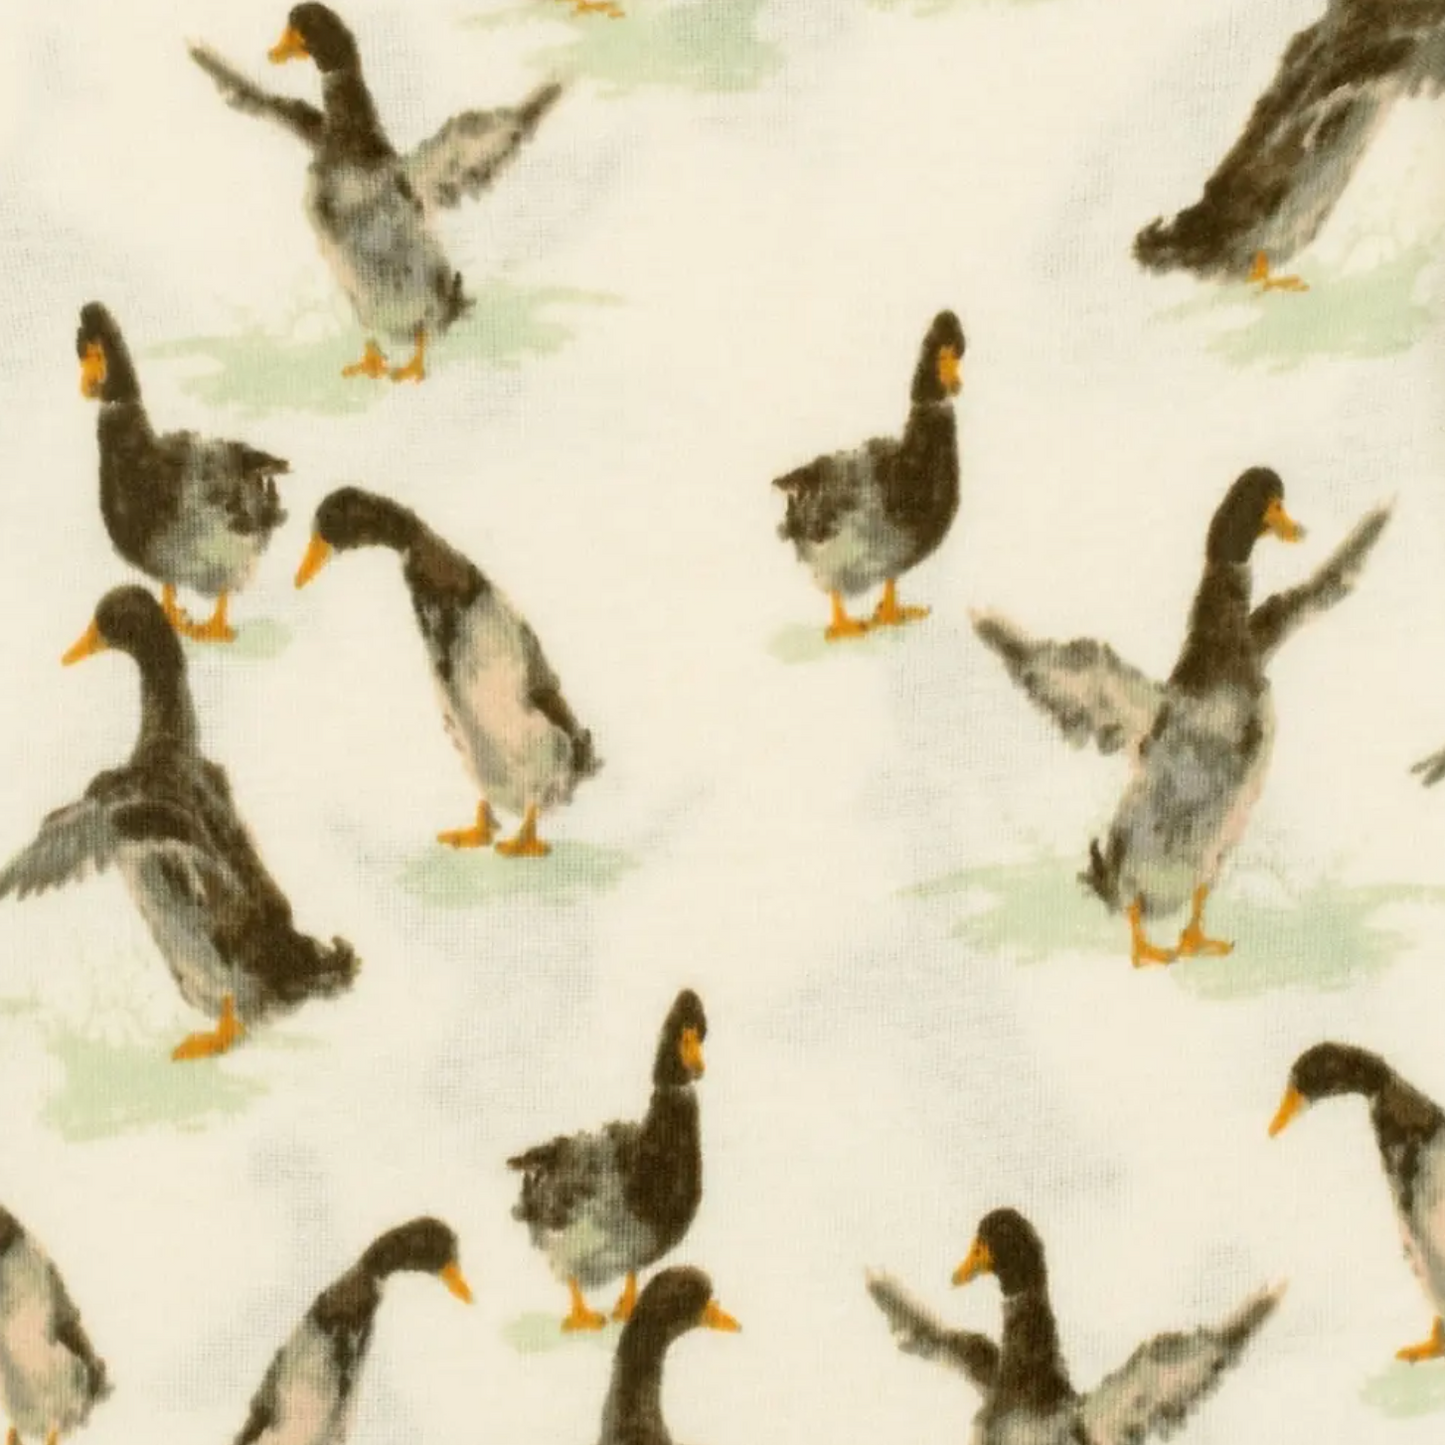 Duck Organic Cotton Zipper Pajama